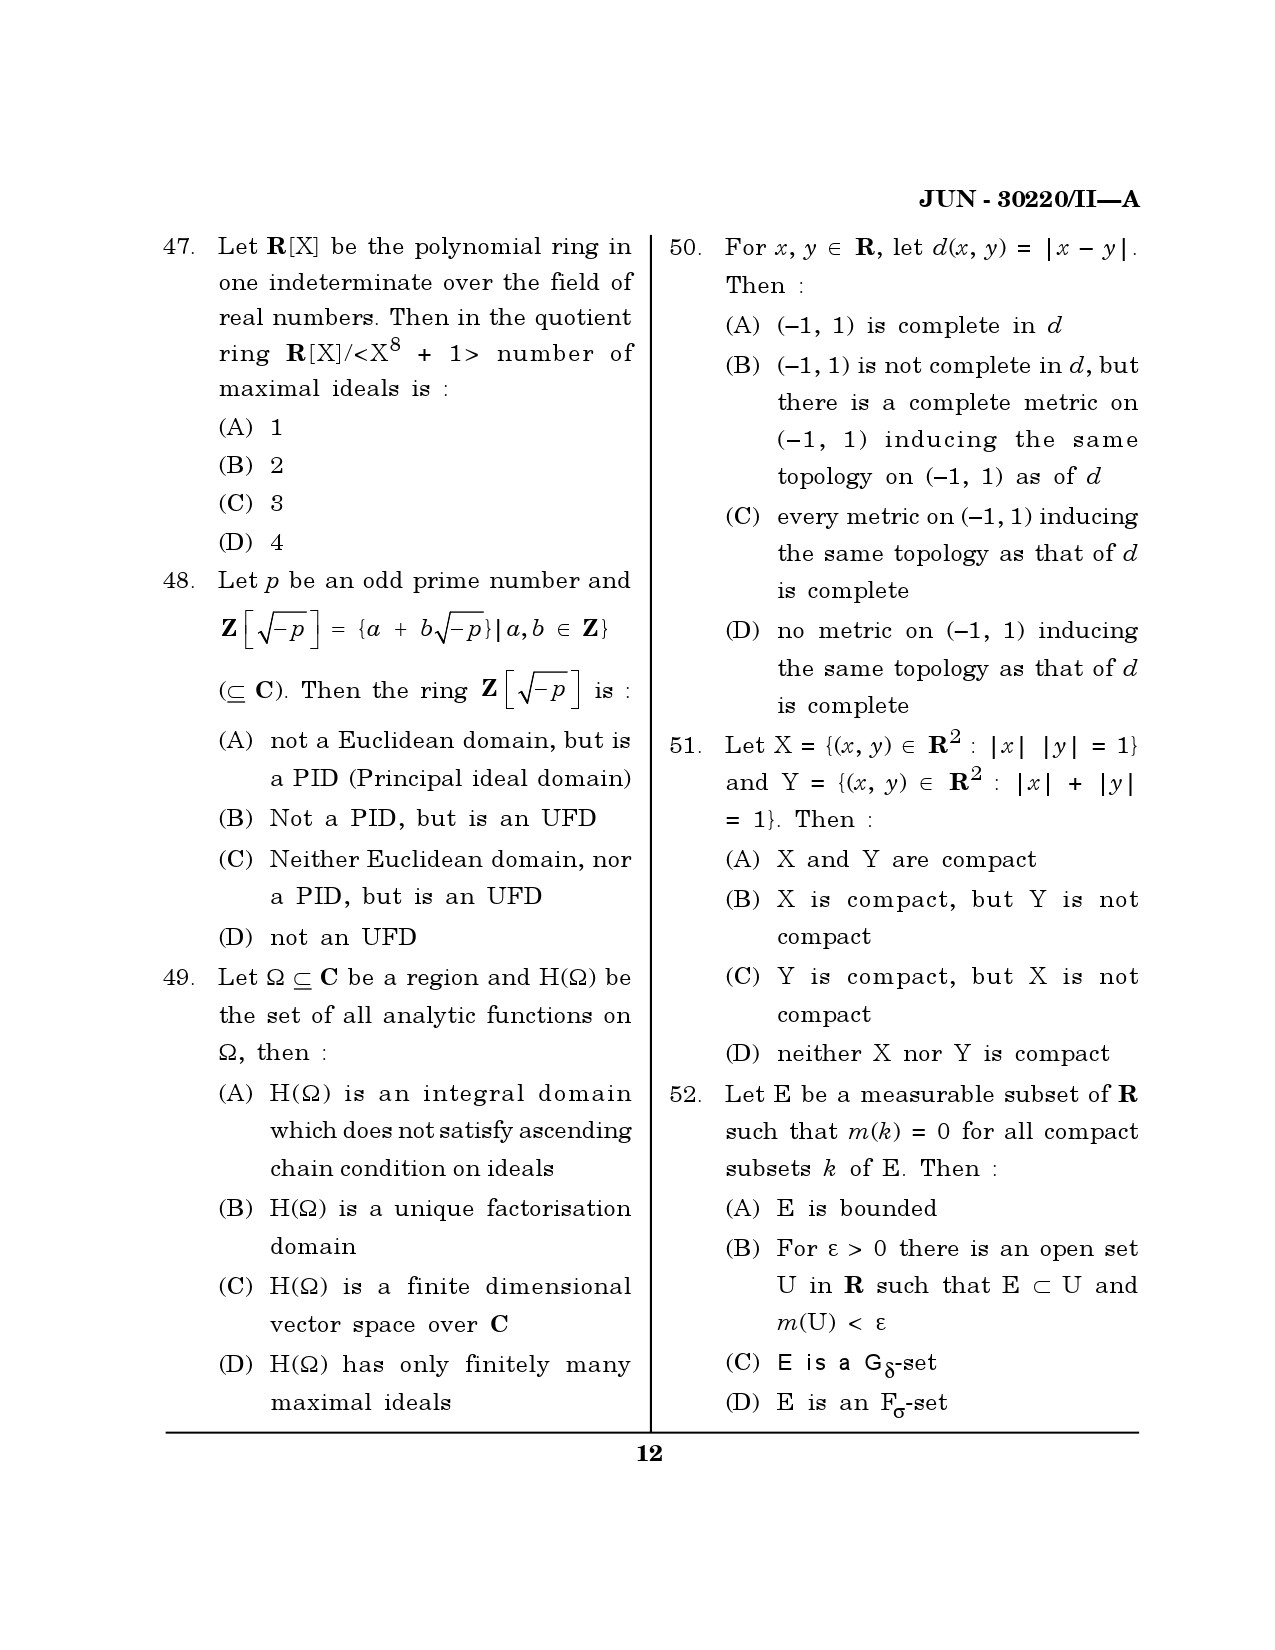 Maharashtra SET Mathematical Sciences Question Paper II June 2020 11